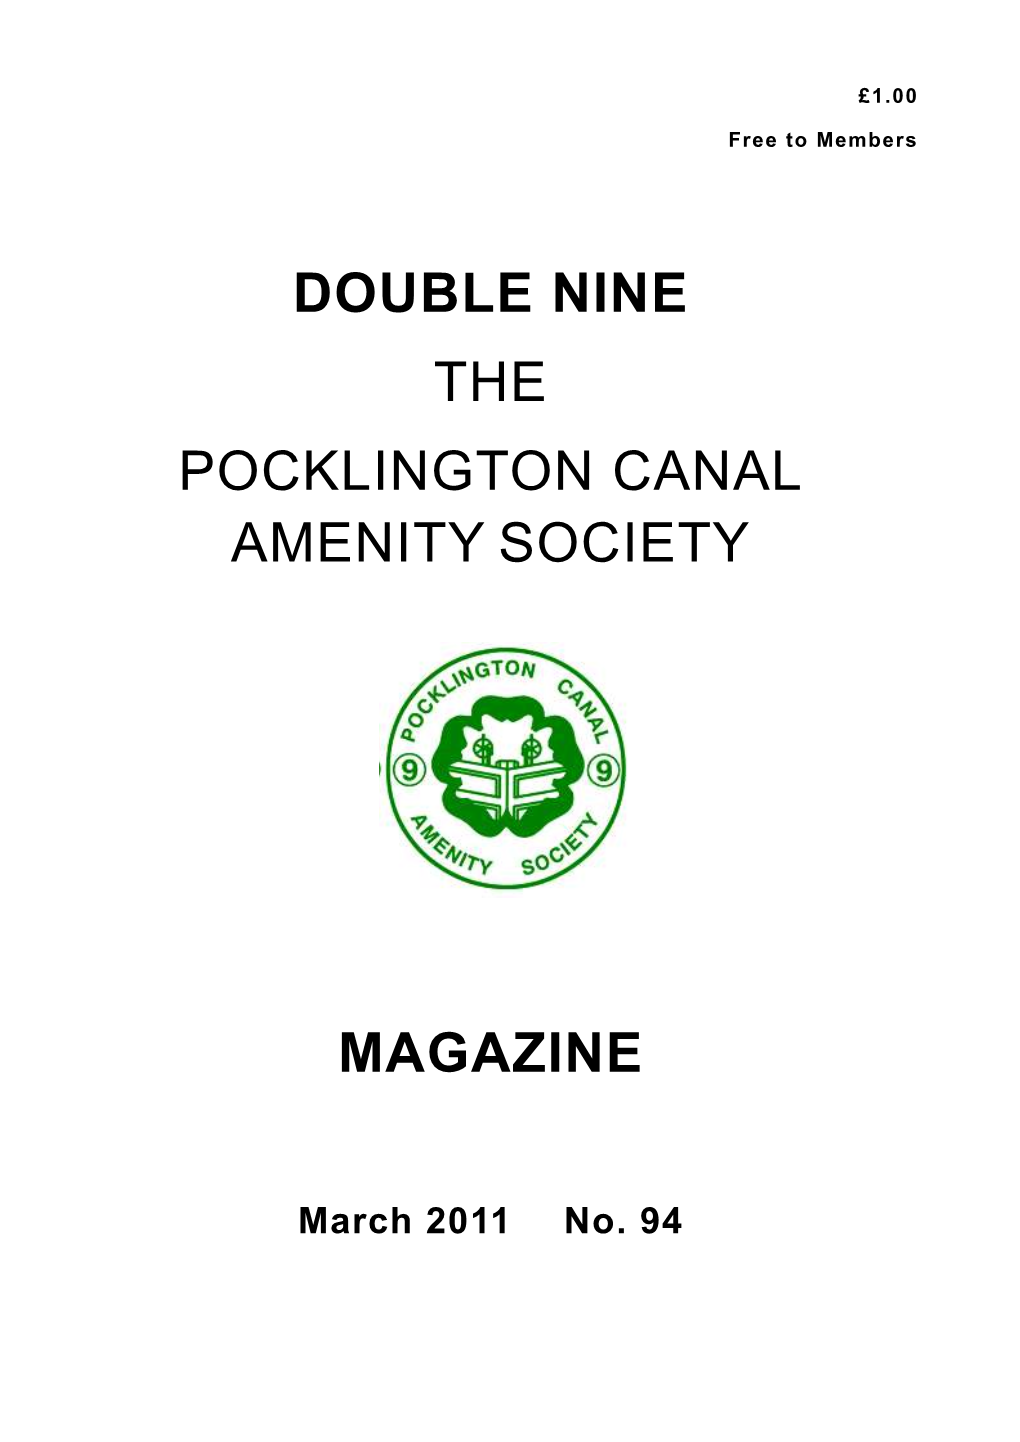 Double Nine the Pocklington Canal Amenity Society